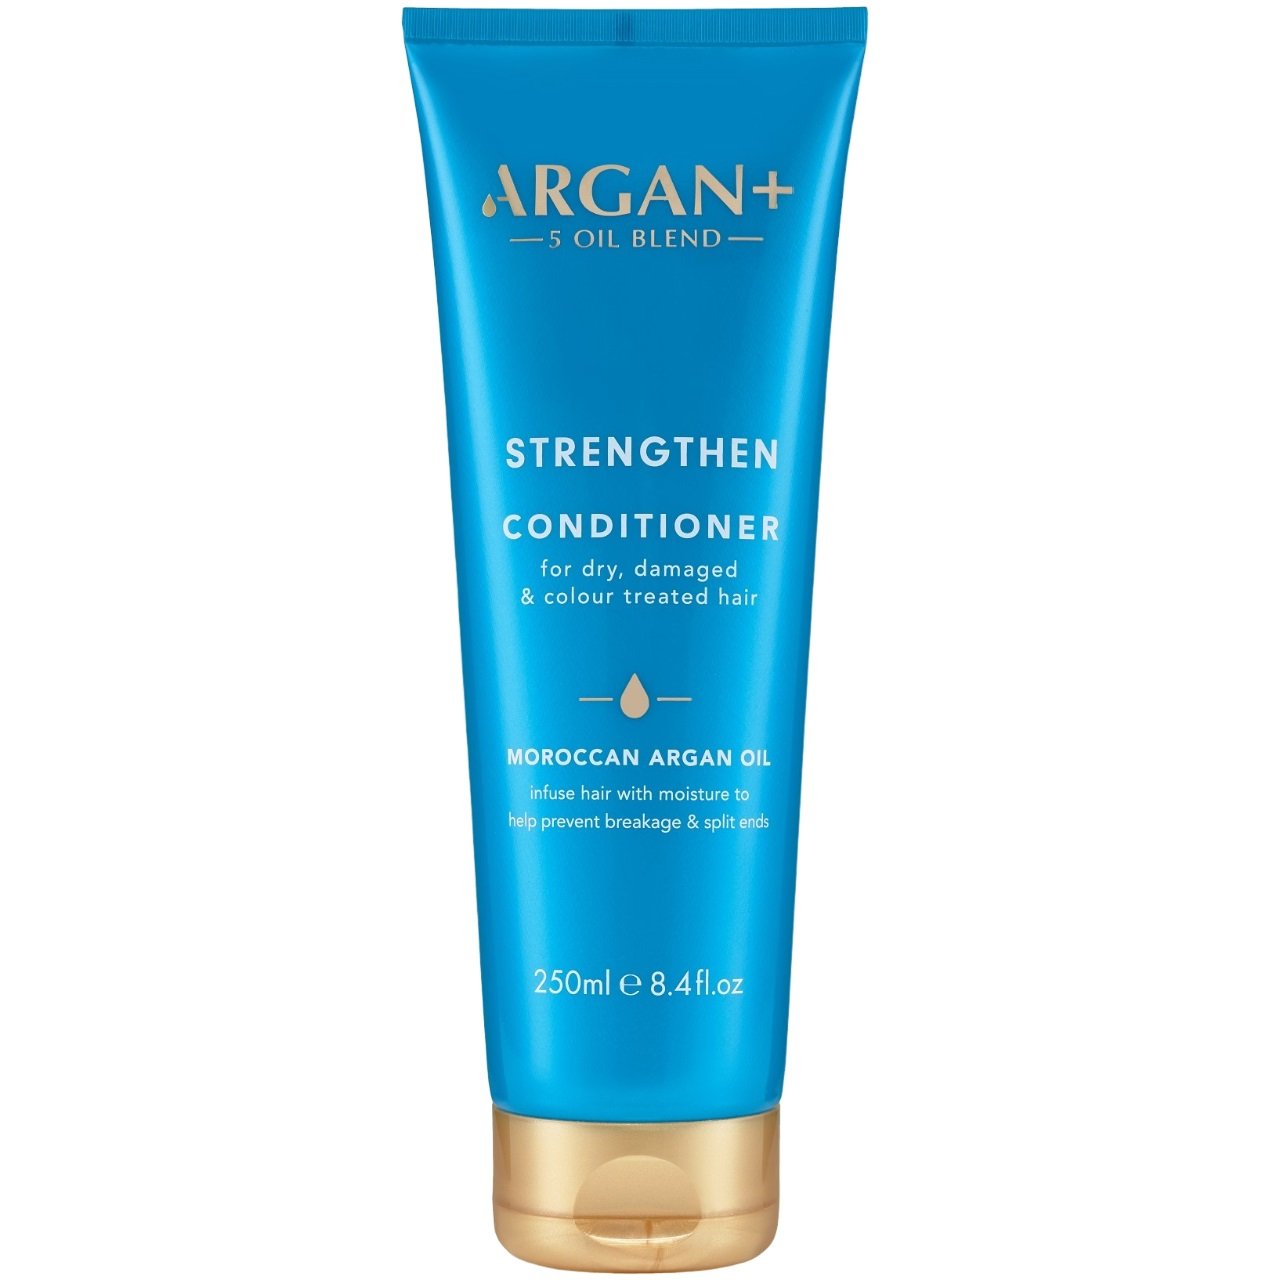 Кондиціонер для волосся Argan+ Moroccan Argan Oil Strengthen, 250 мл - фото 1